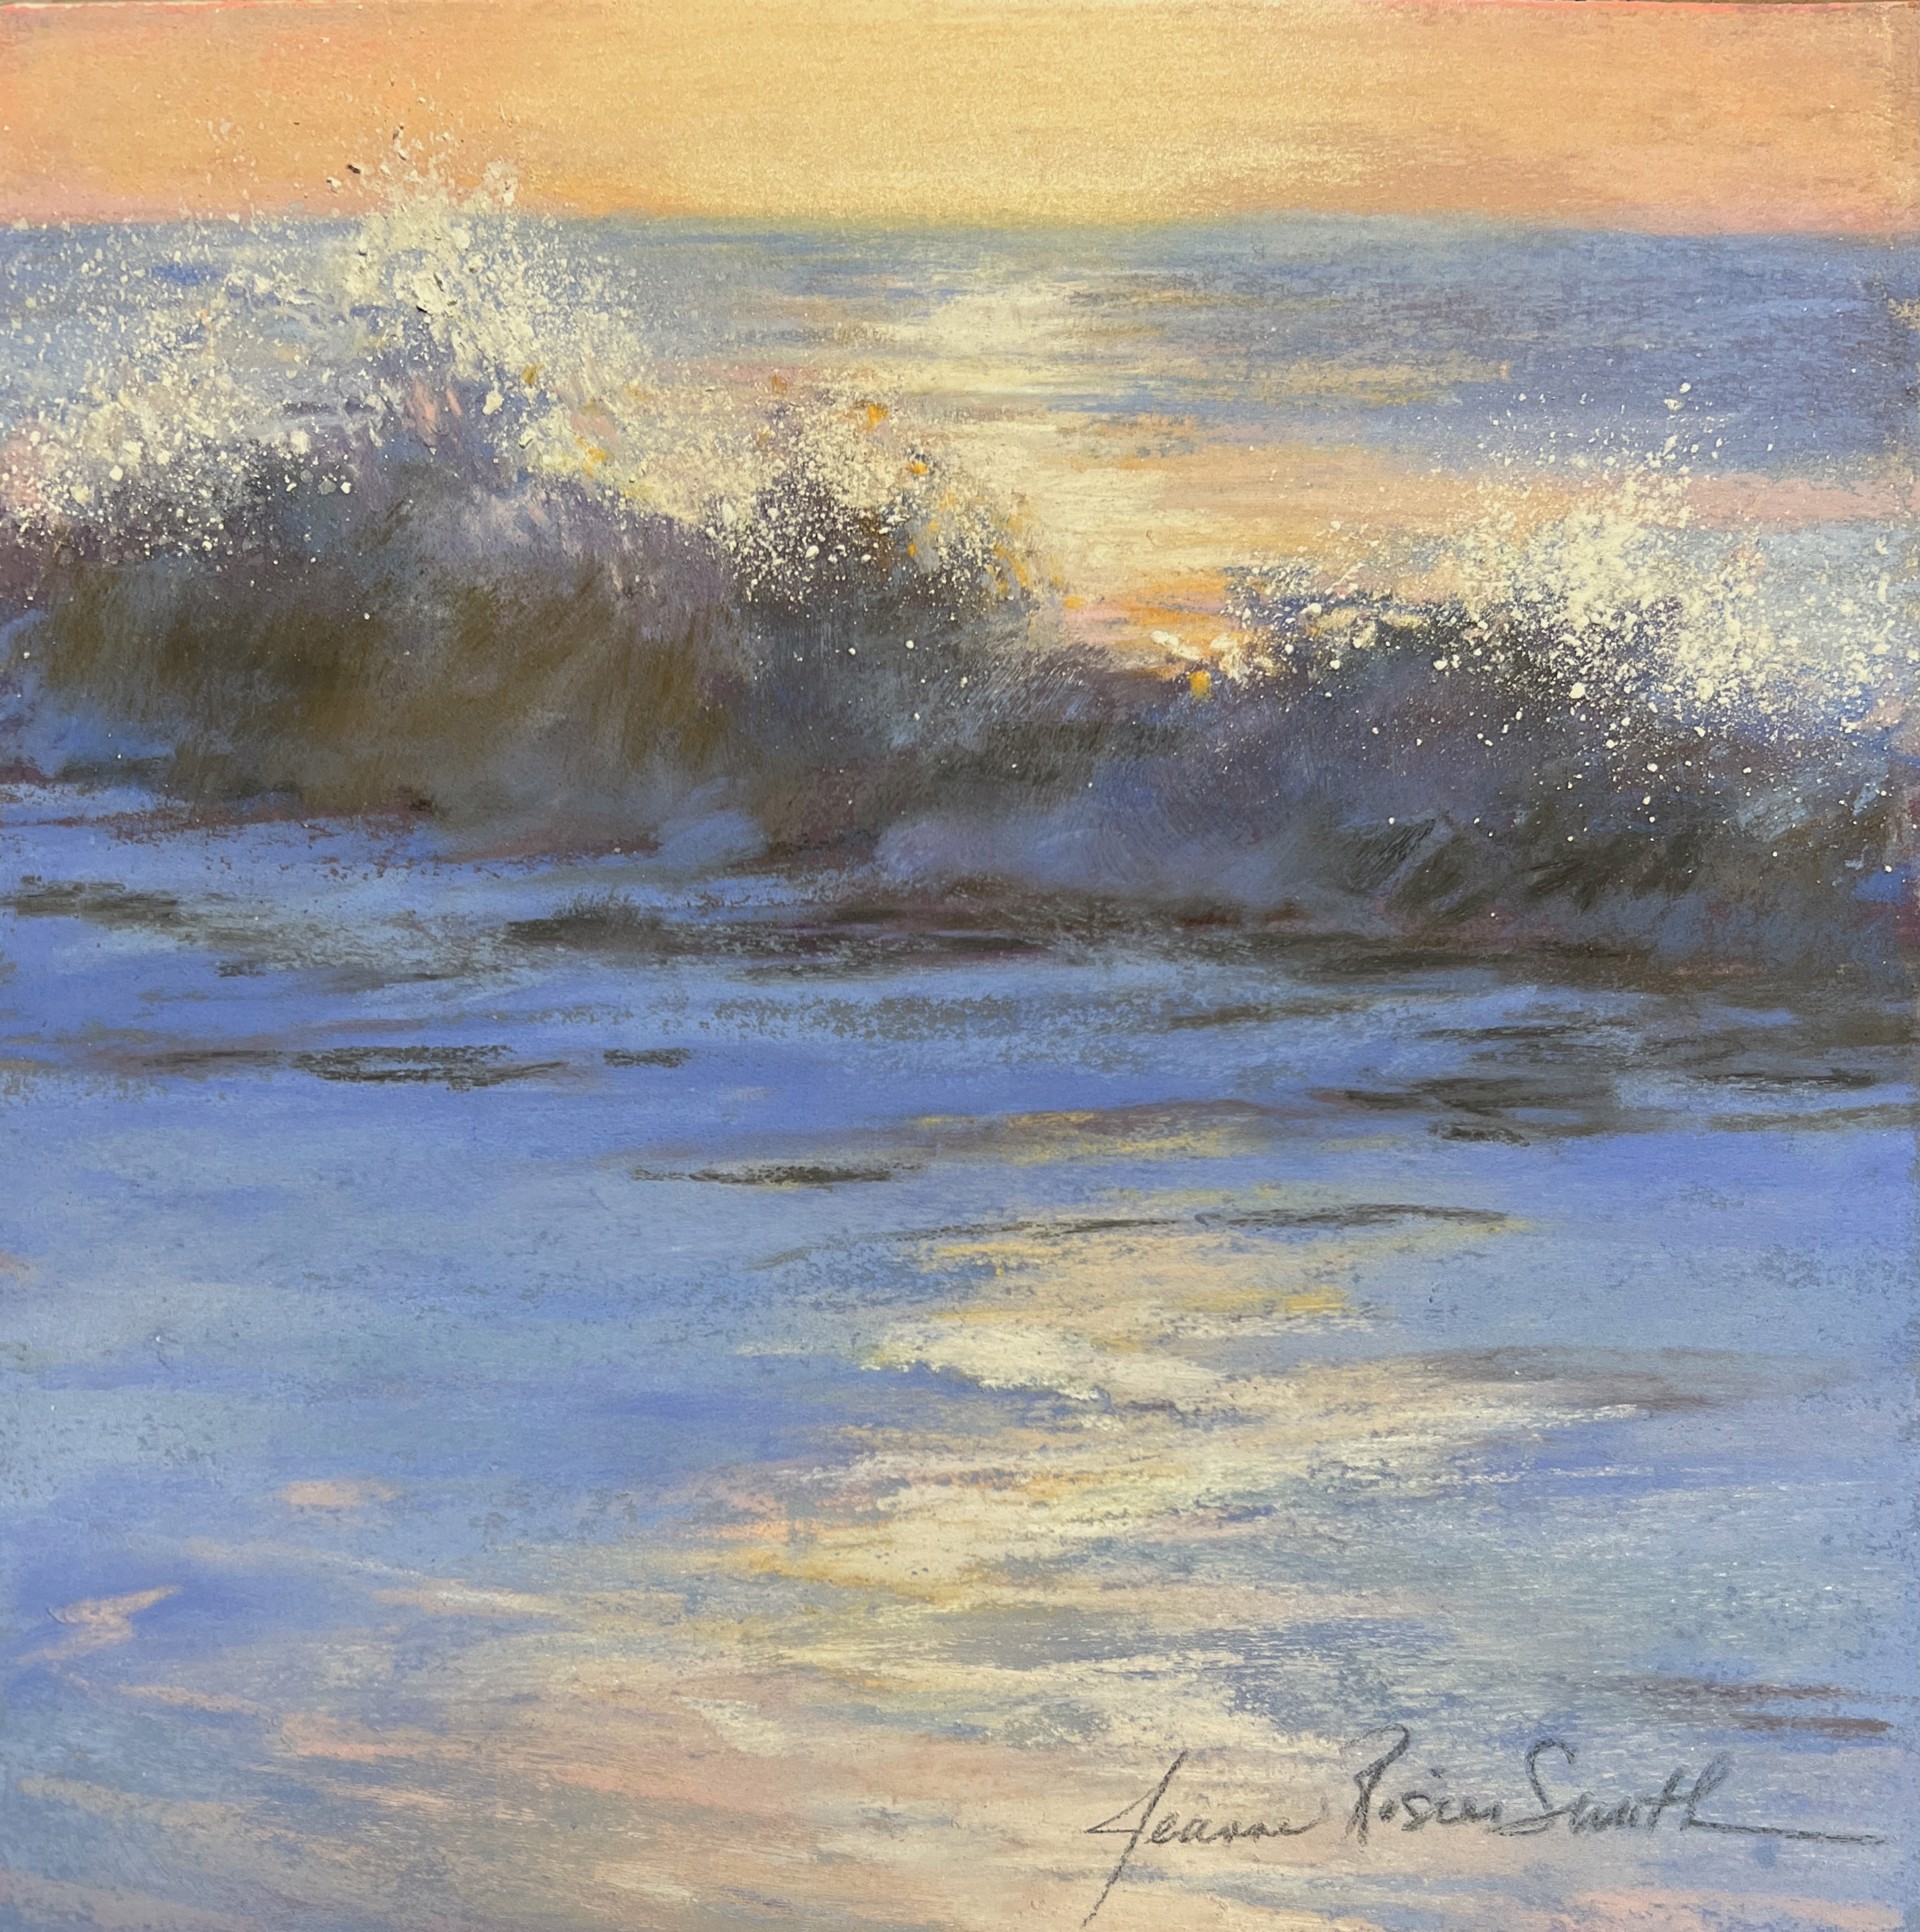 Dawn's Early Light by Jeanne Rosier Smith